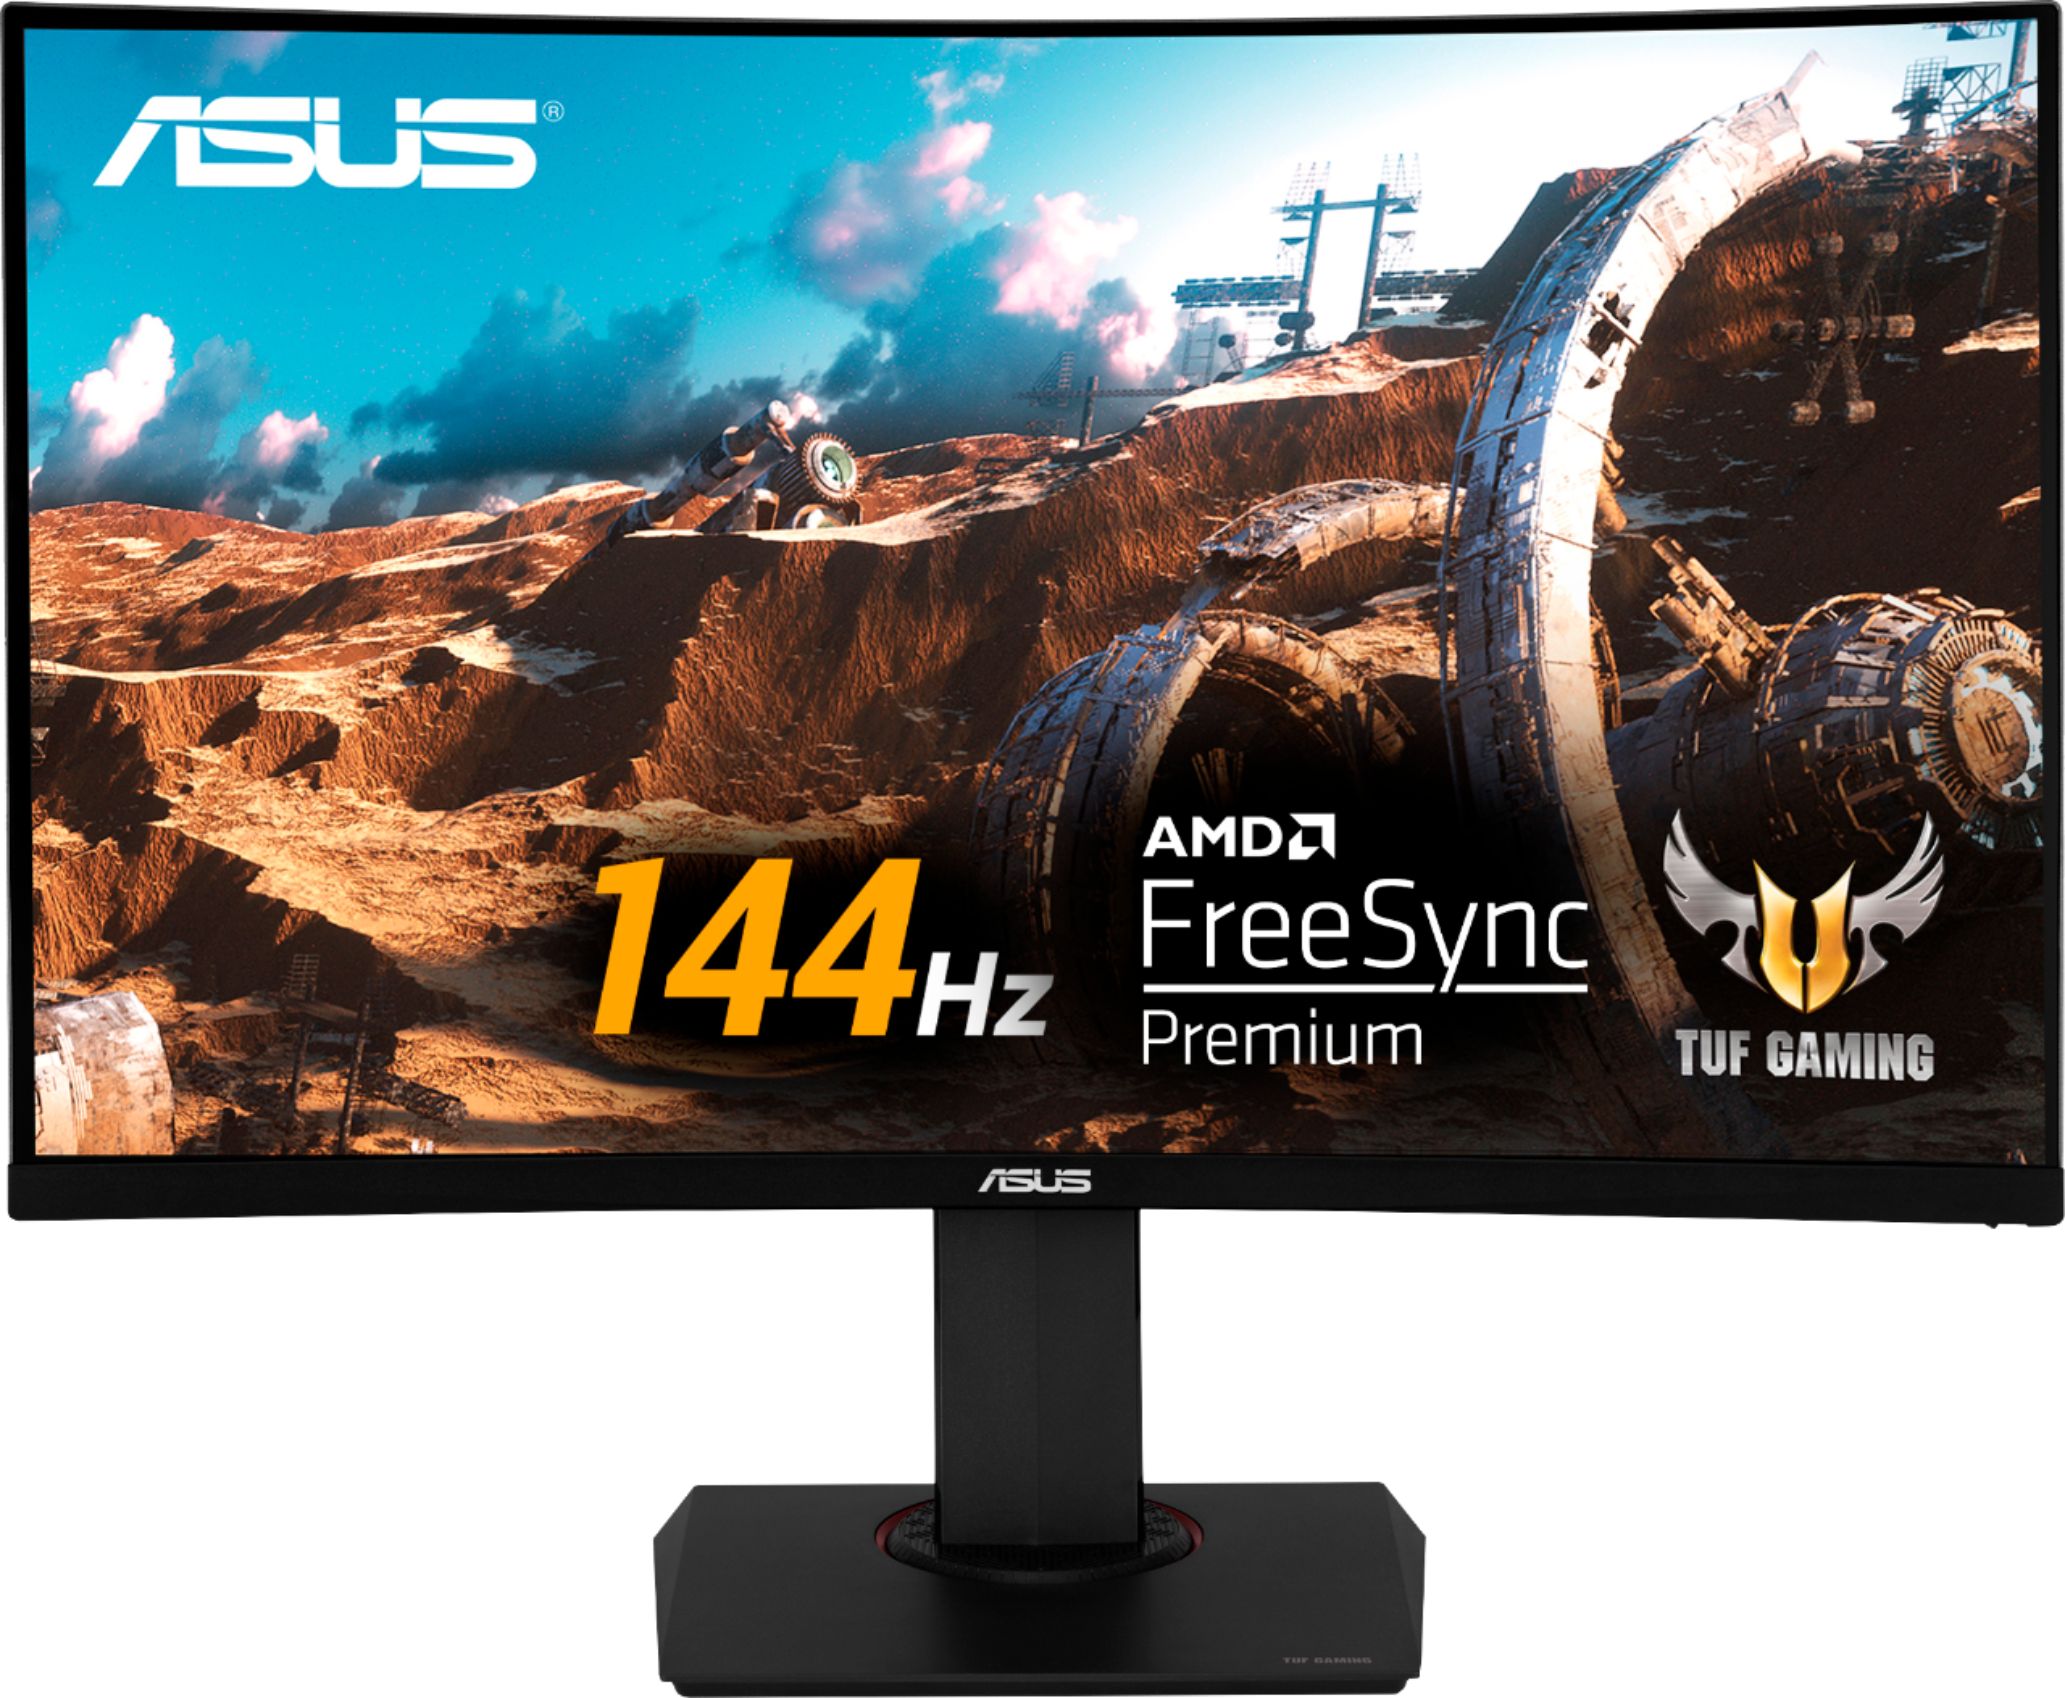 Customer Reviews: ASUS Gaming 31.5 LCD Curved FreeSync Monitor